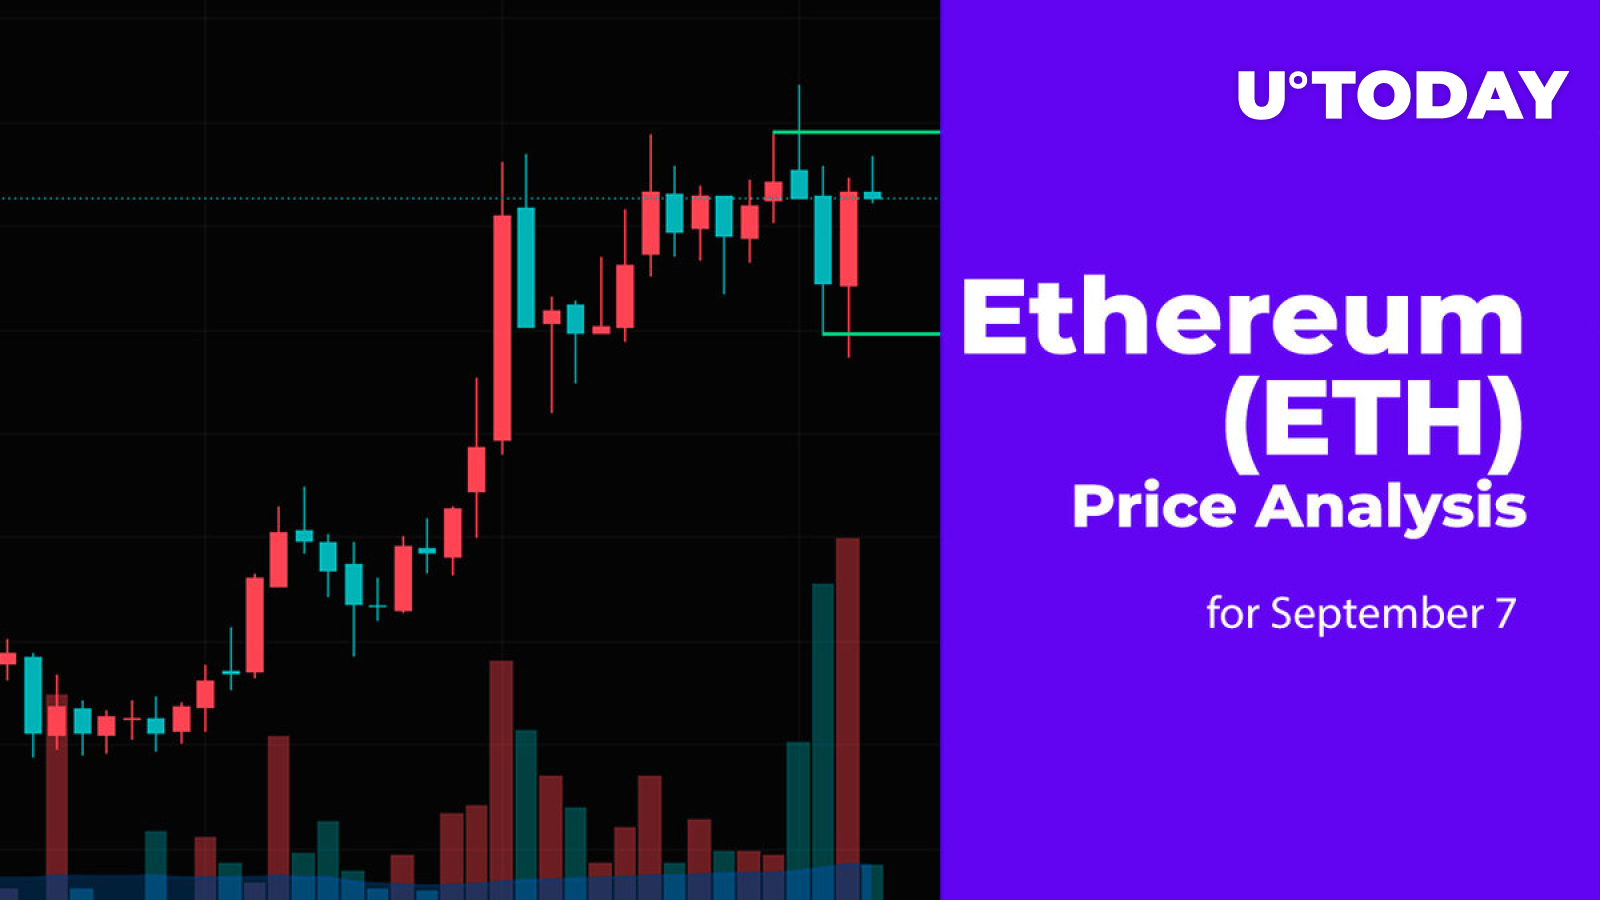 Ethereum (ETH) Price Analysis for September 7